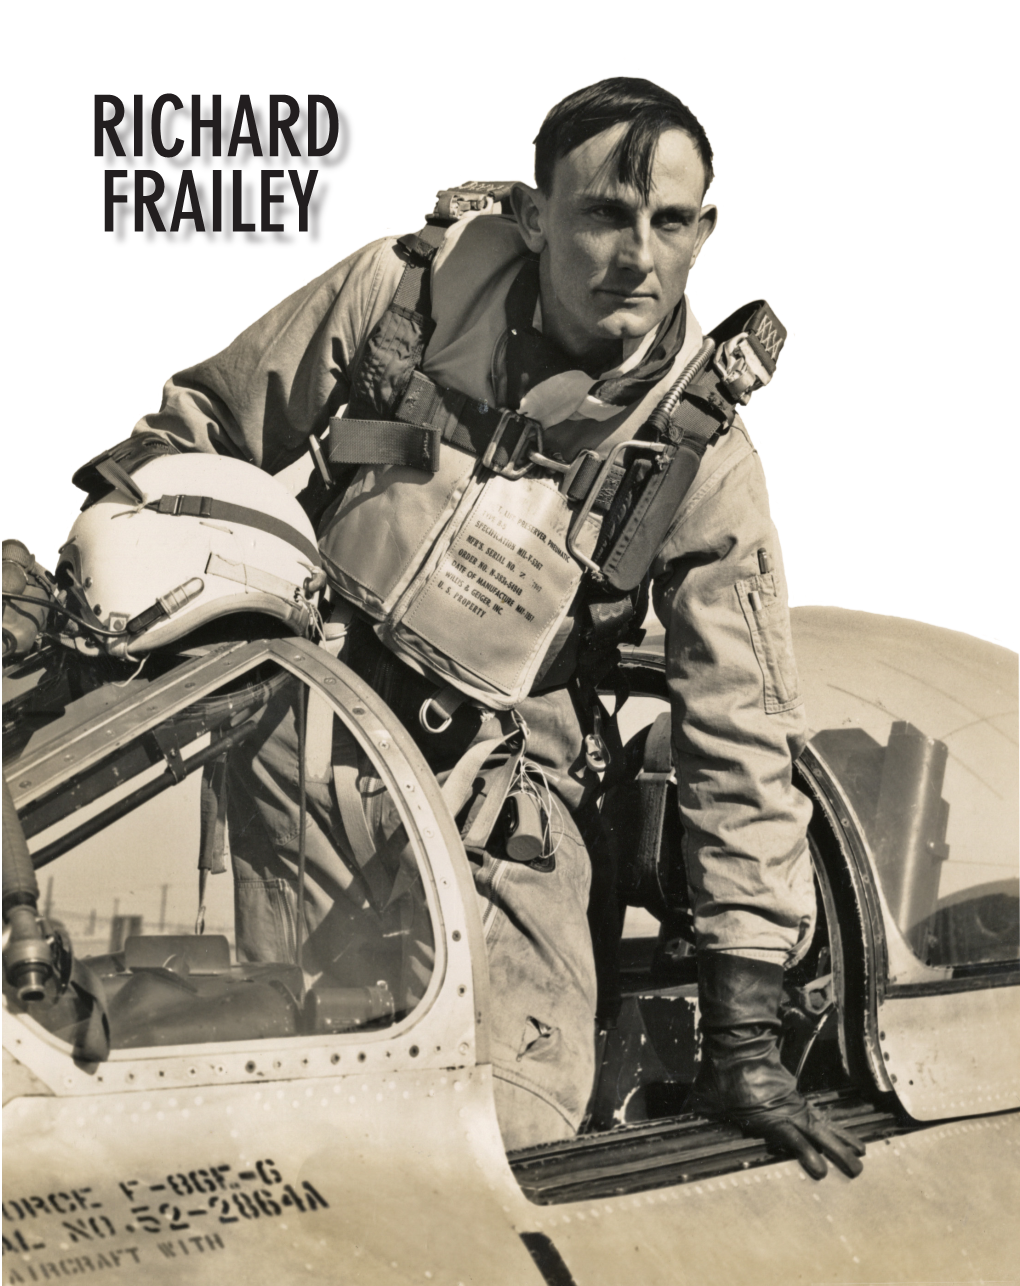 RICHARD FRAILEY the Air War Over Korea